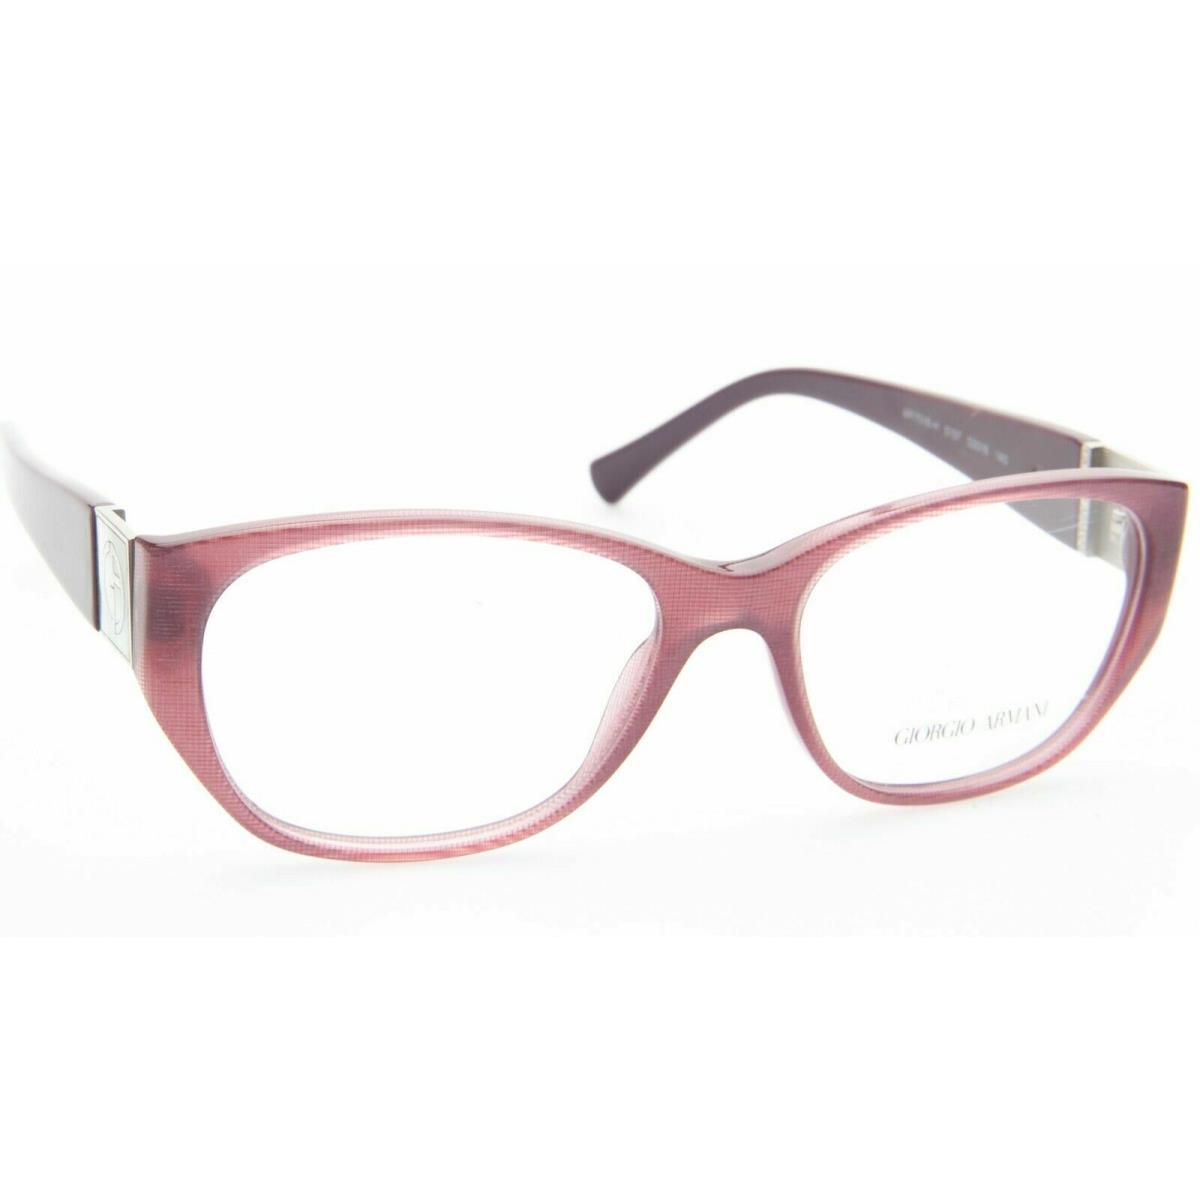 Giorgio Armani eyeglasses  - Cherry , Cherry Fabric Frame, Clear Lens 0